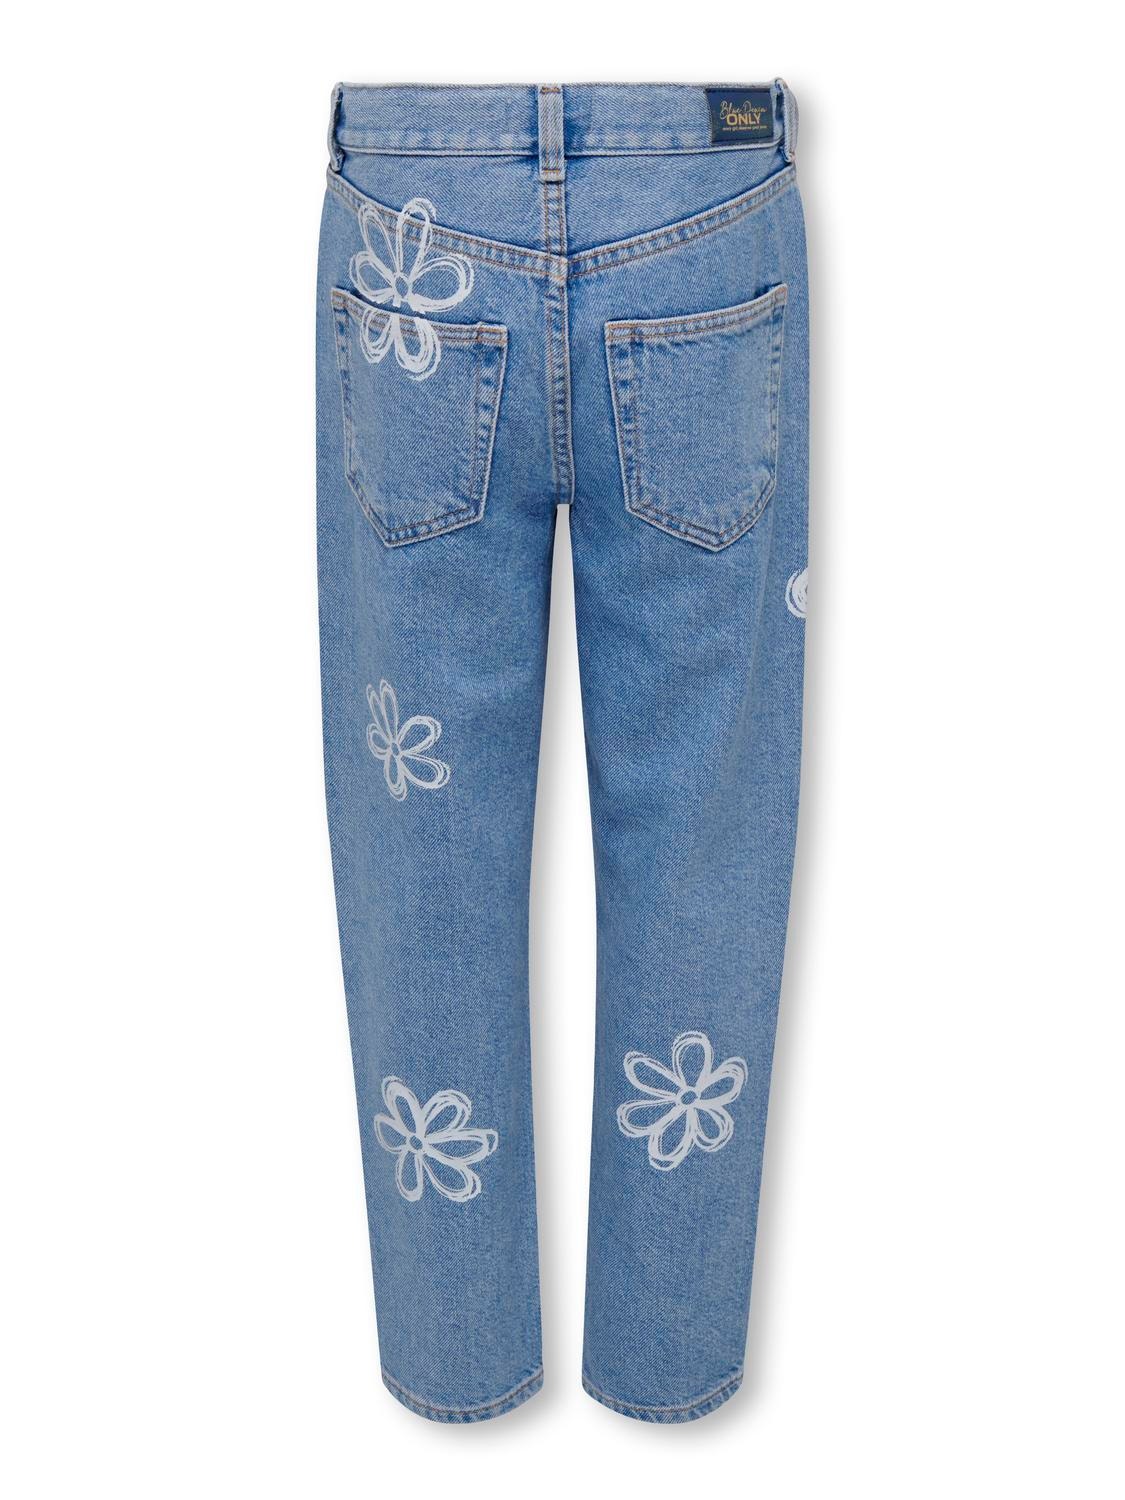 ONLY Jeans Straight Fit Vita media -Light Blue Denim - 15296606